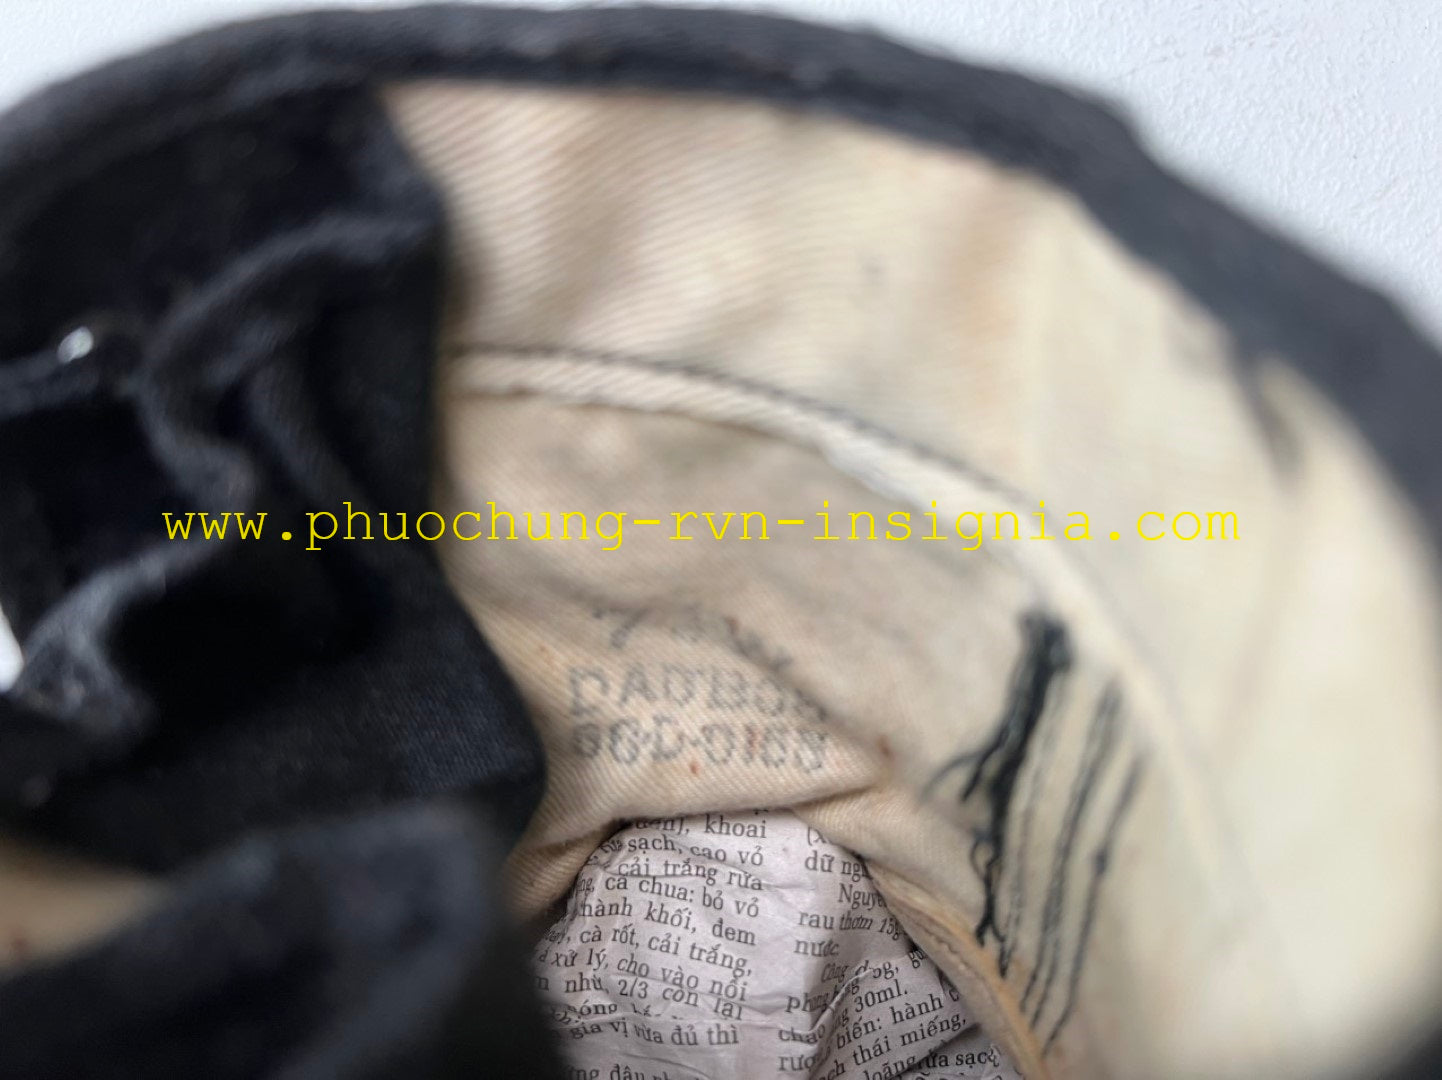 ARVN CIDG MACV-SOG CISO Indigenous Bata Canvas Rubber Sole Boots Size 7W